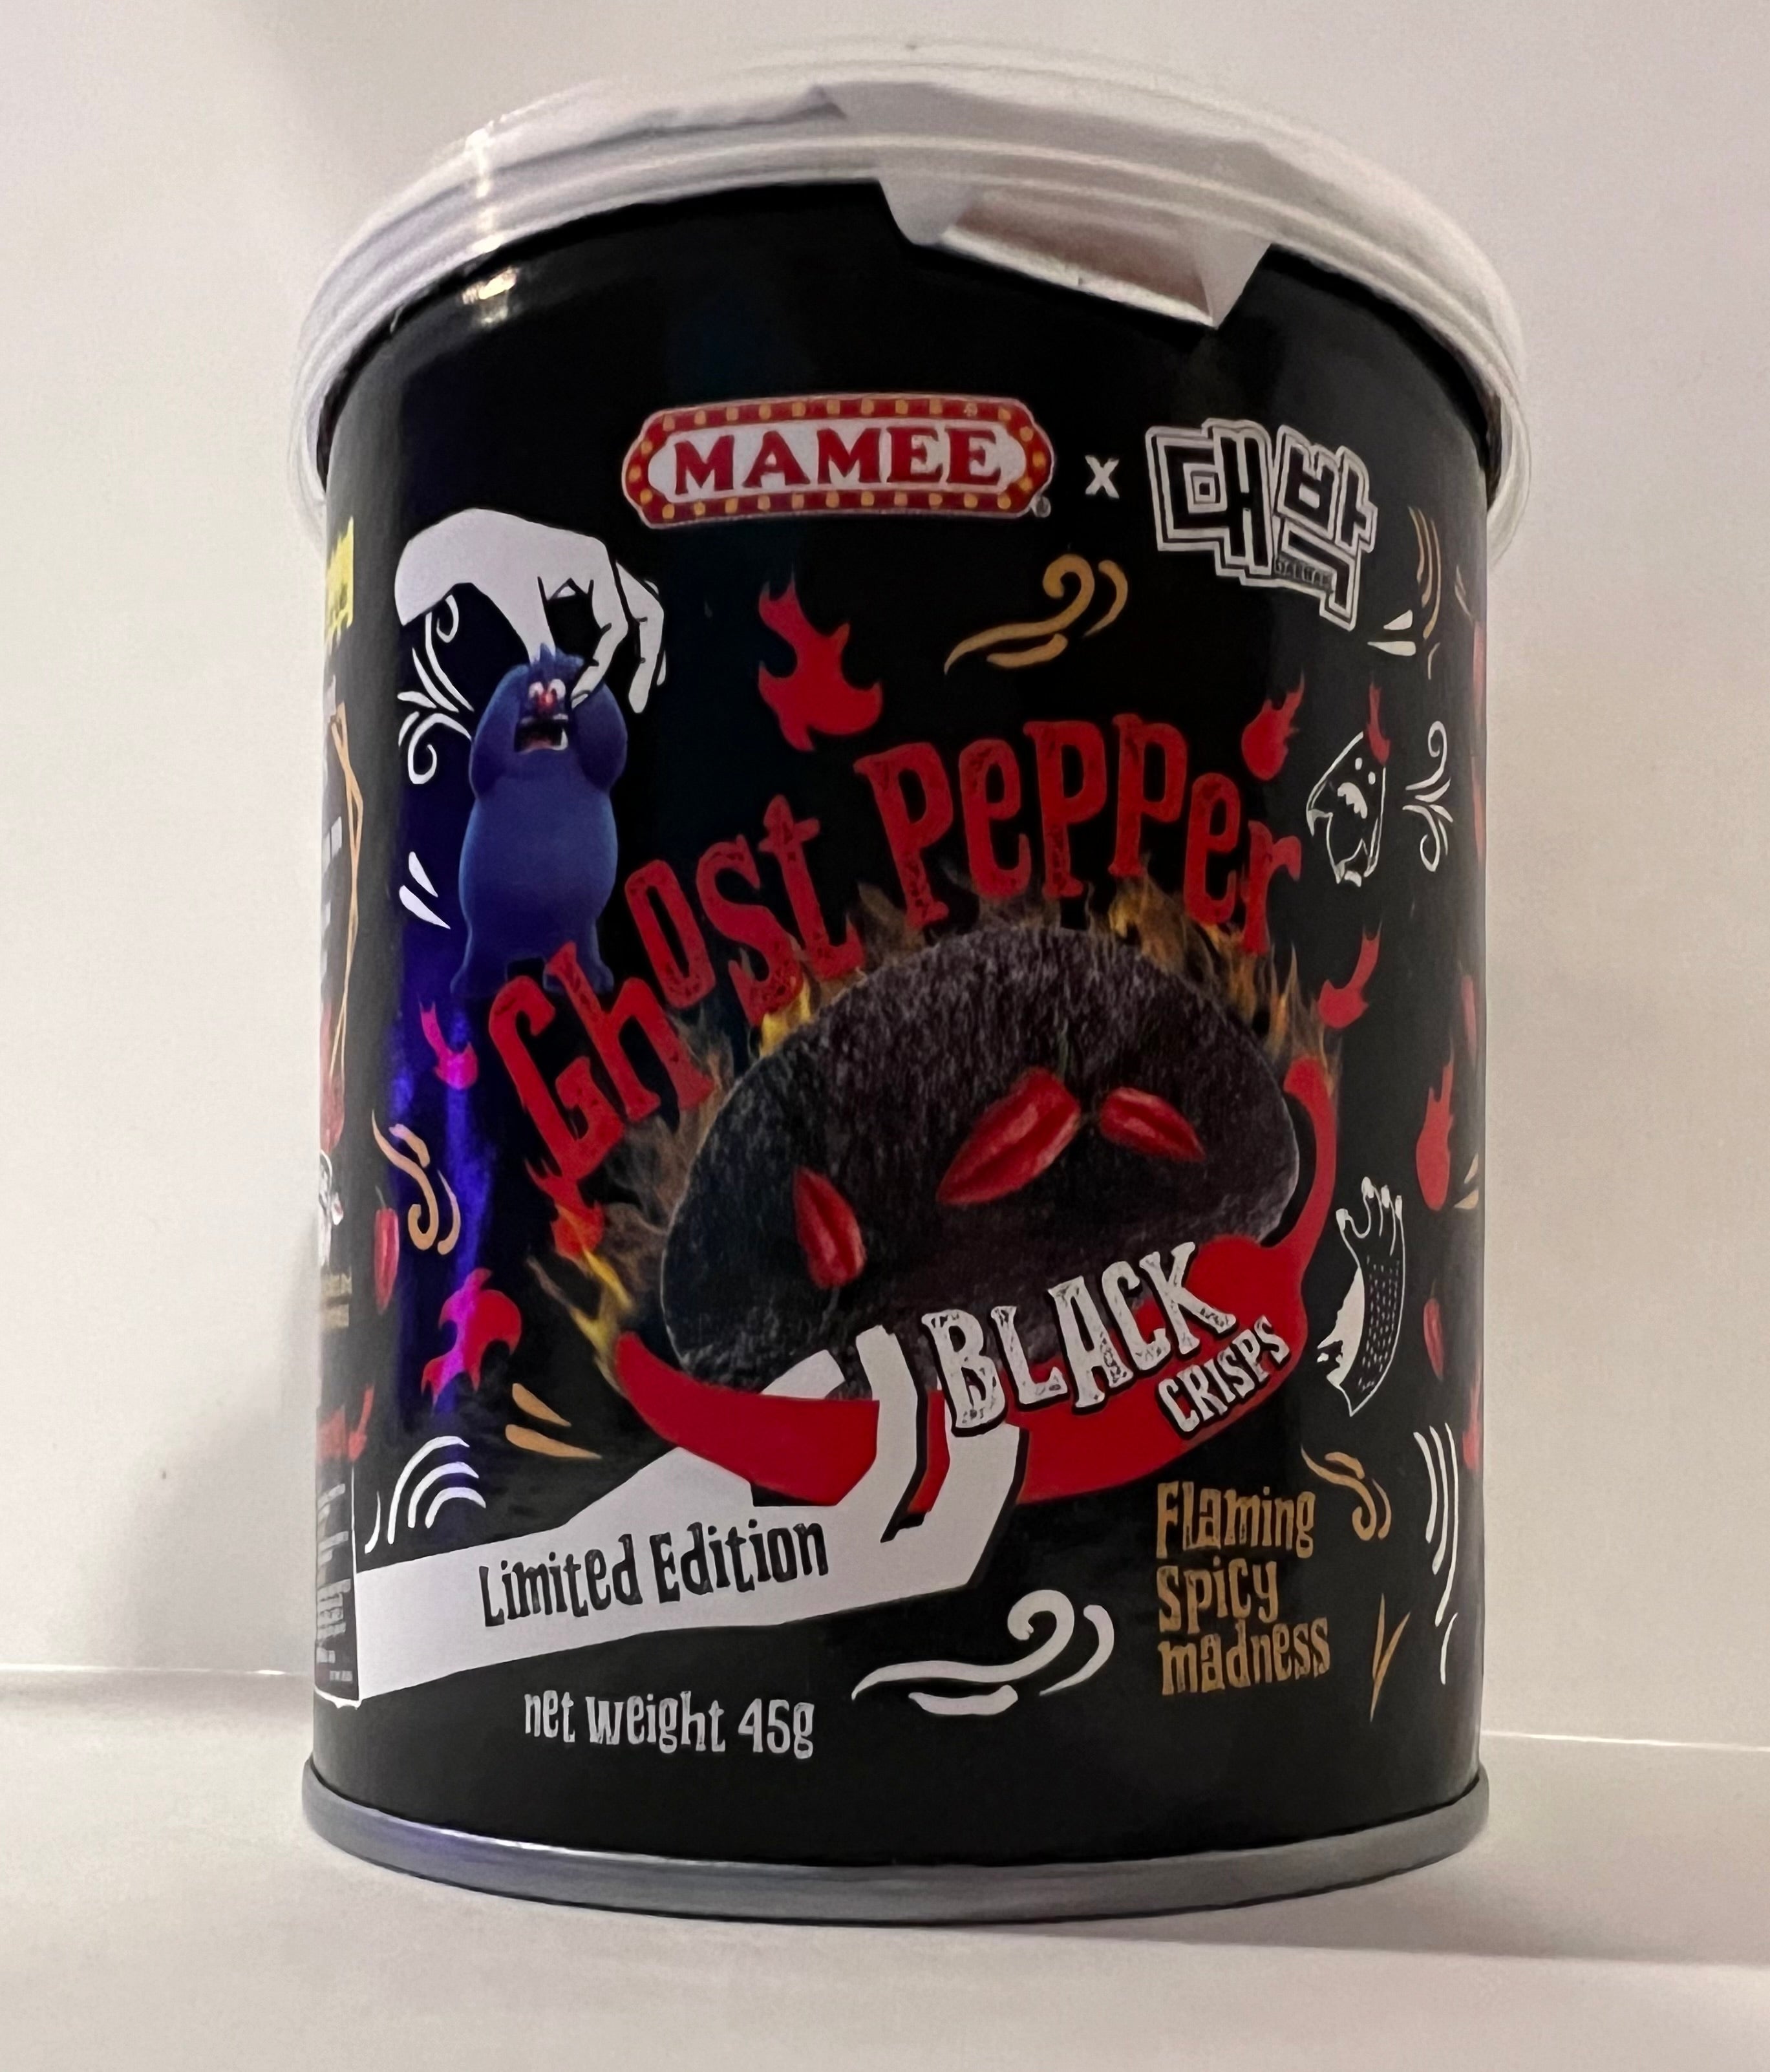 Mamee Ghost pepper black crisps